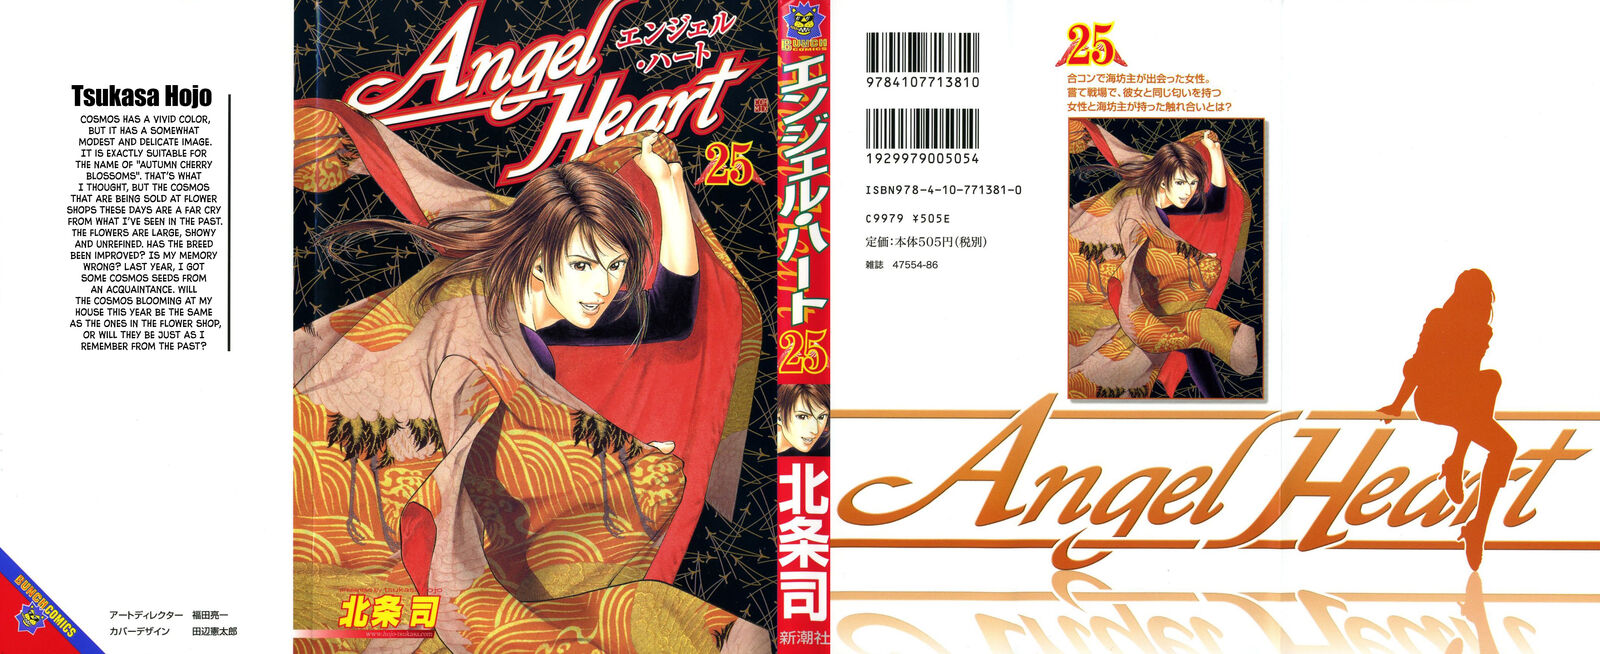 Angel Heart 265 1